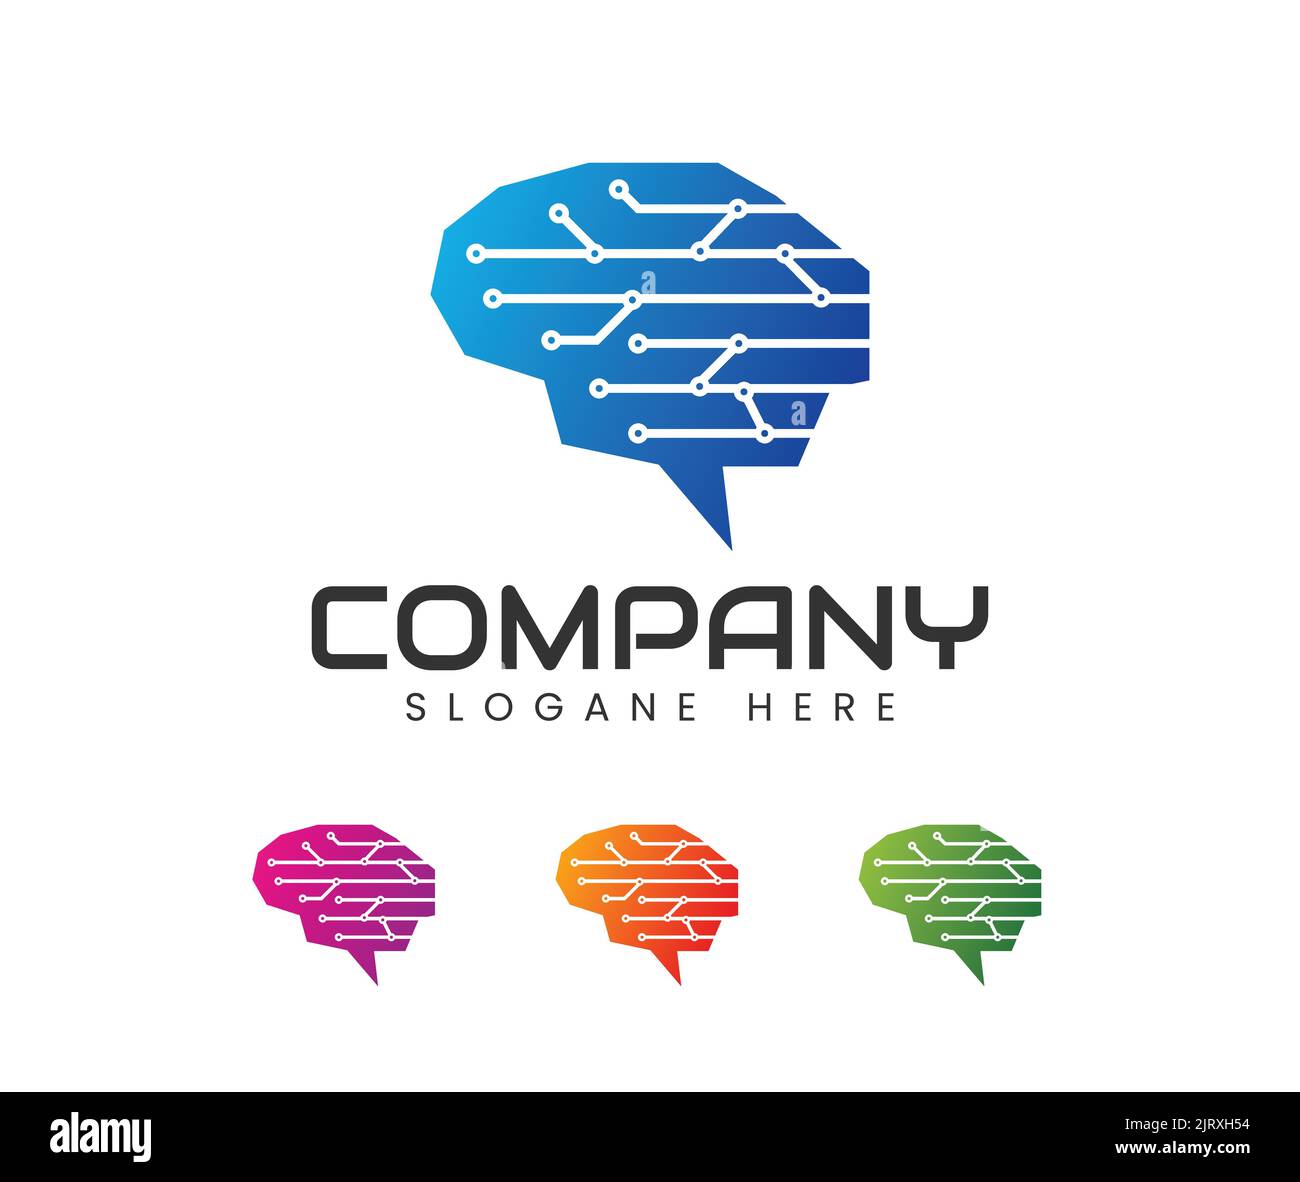 Smart brain tech logo design. Brain, Creative mind, learning and design icons, logos. Man head, people symbols Stock Vector